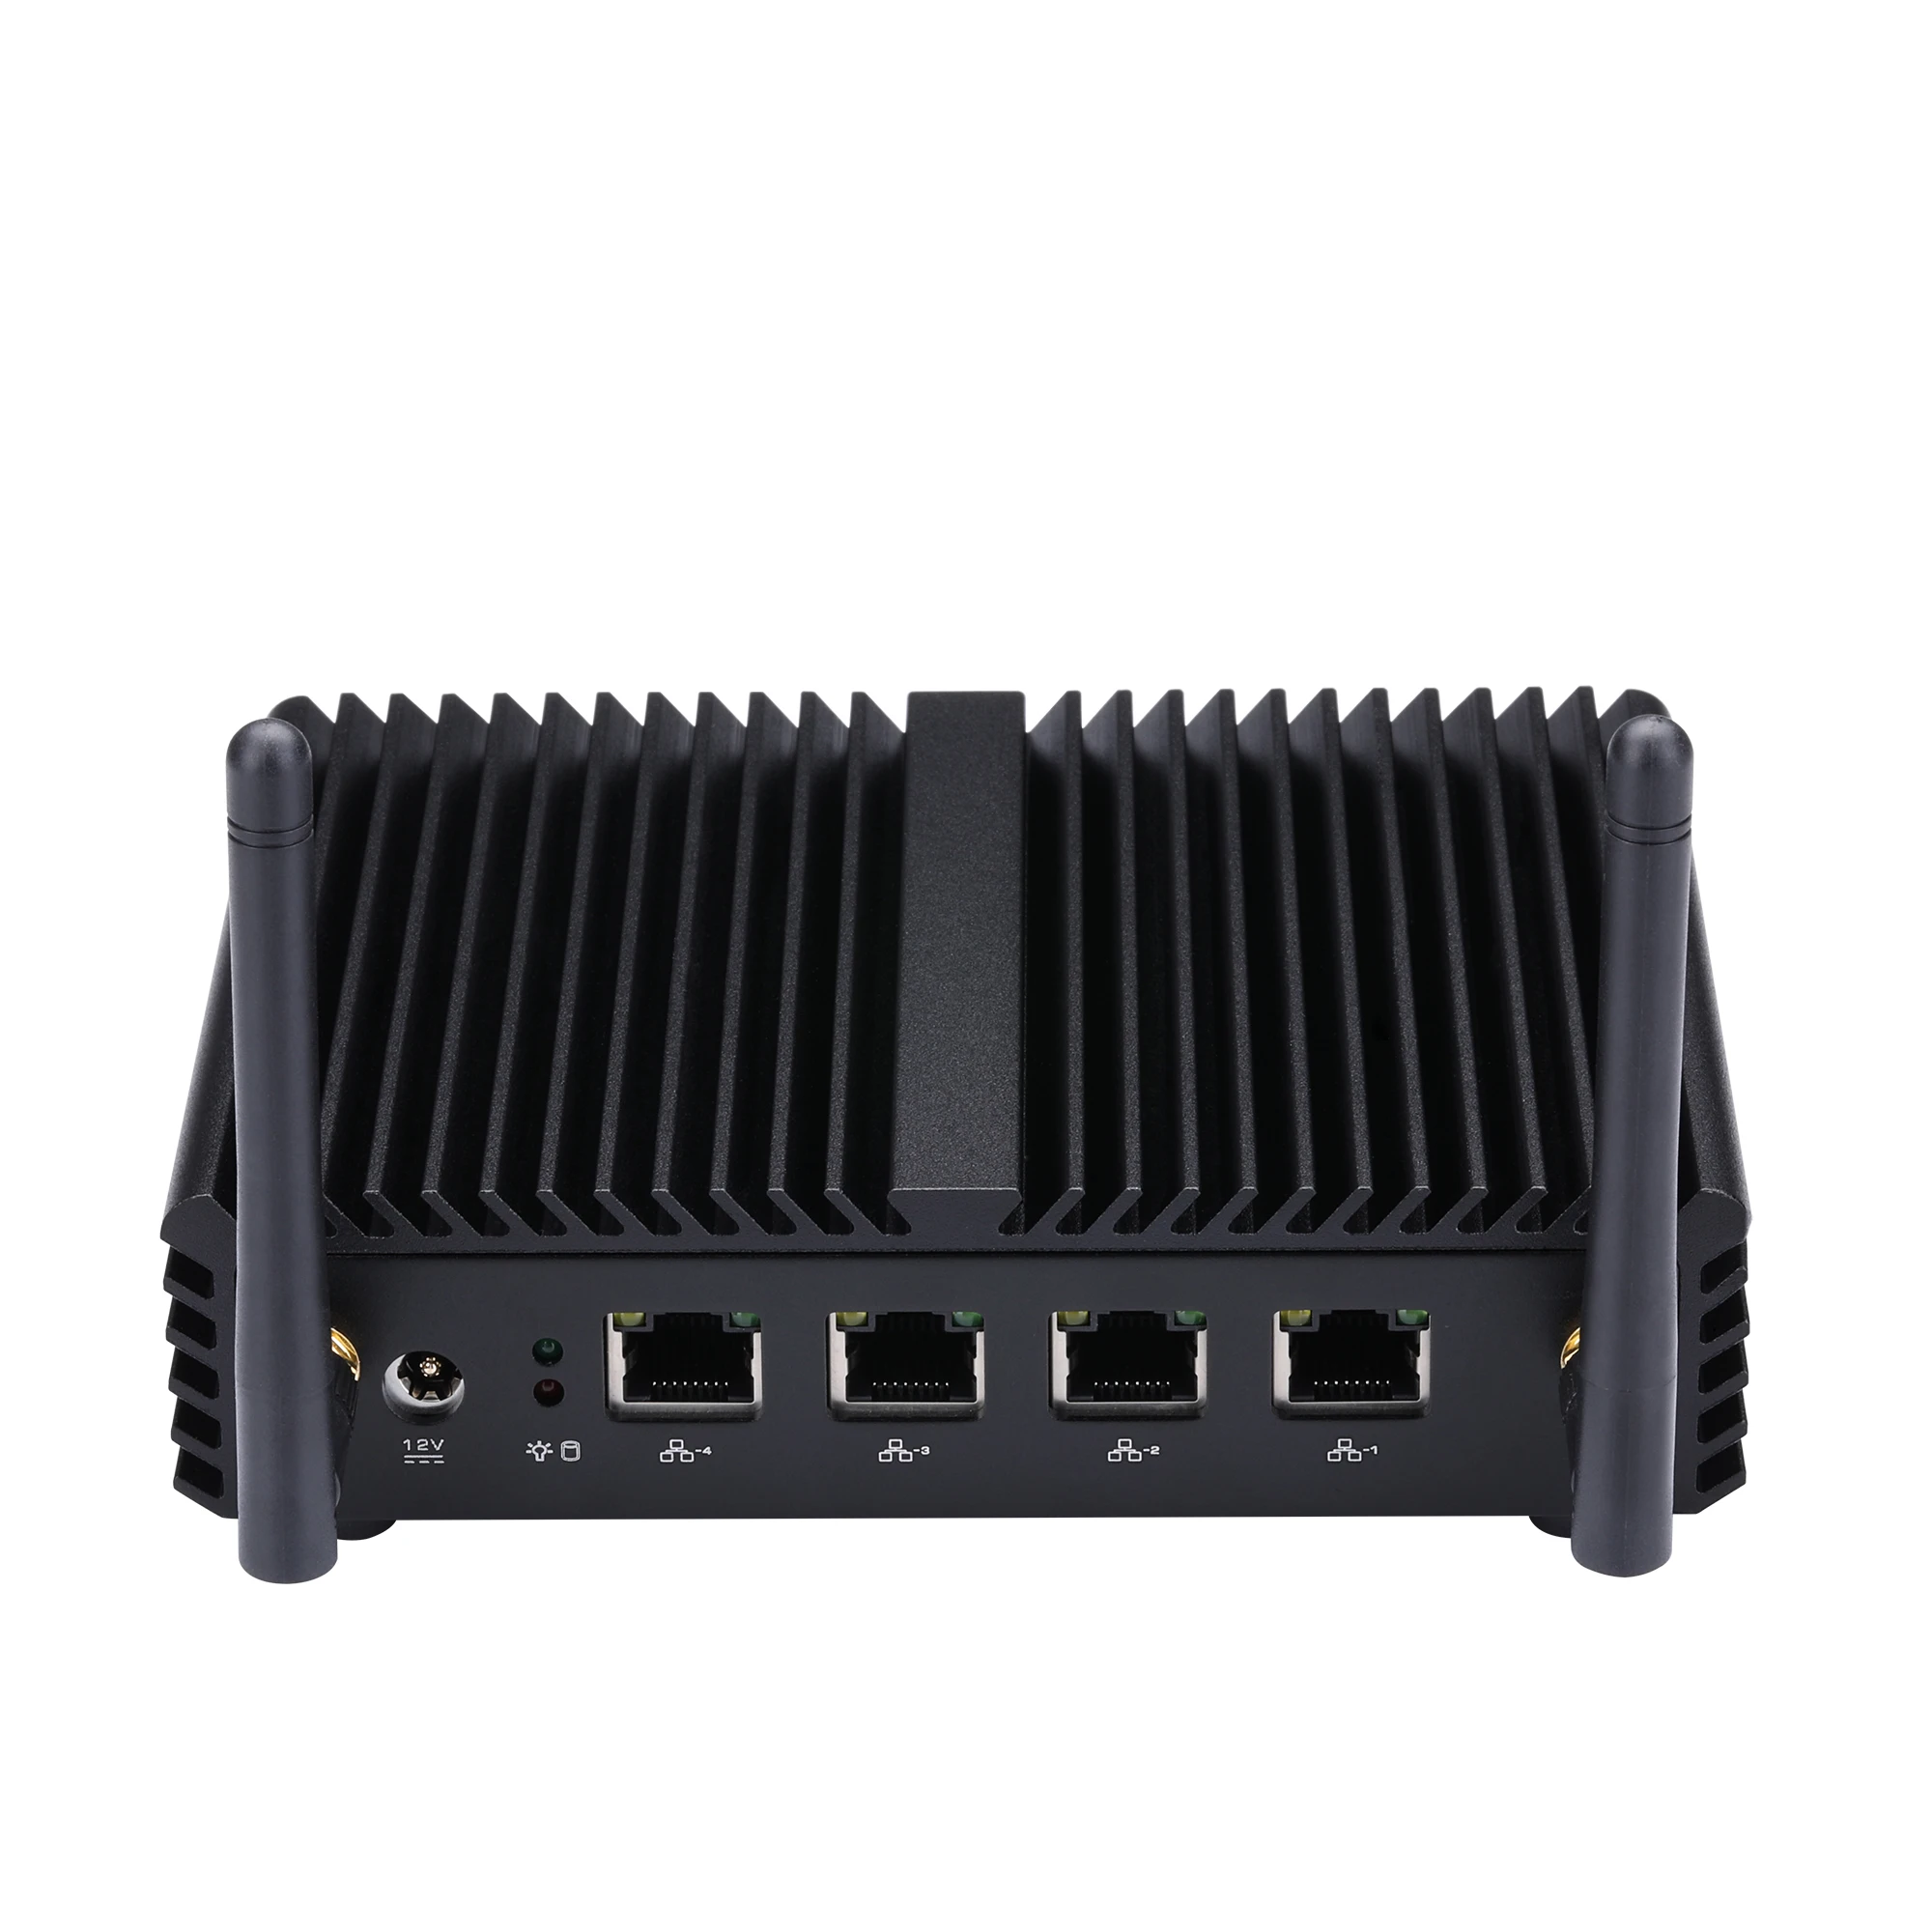 4 LAN Firewall Router Qotom-Q190G4N/Q195G4N S07 Quad Core J1900/N3540 VGA 4*USB Fanless X86 Mini PC